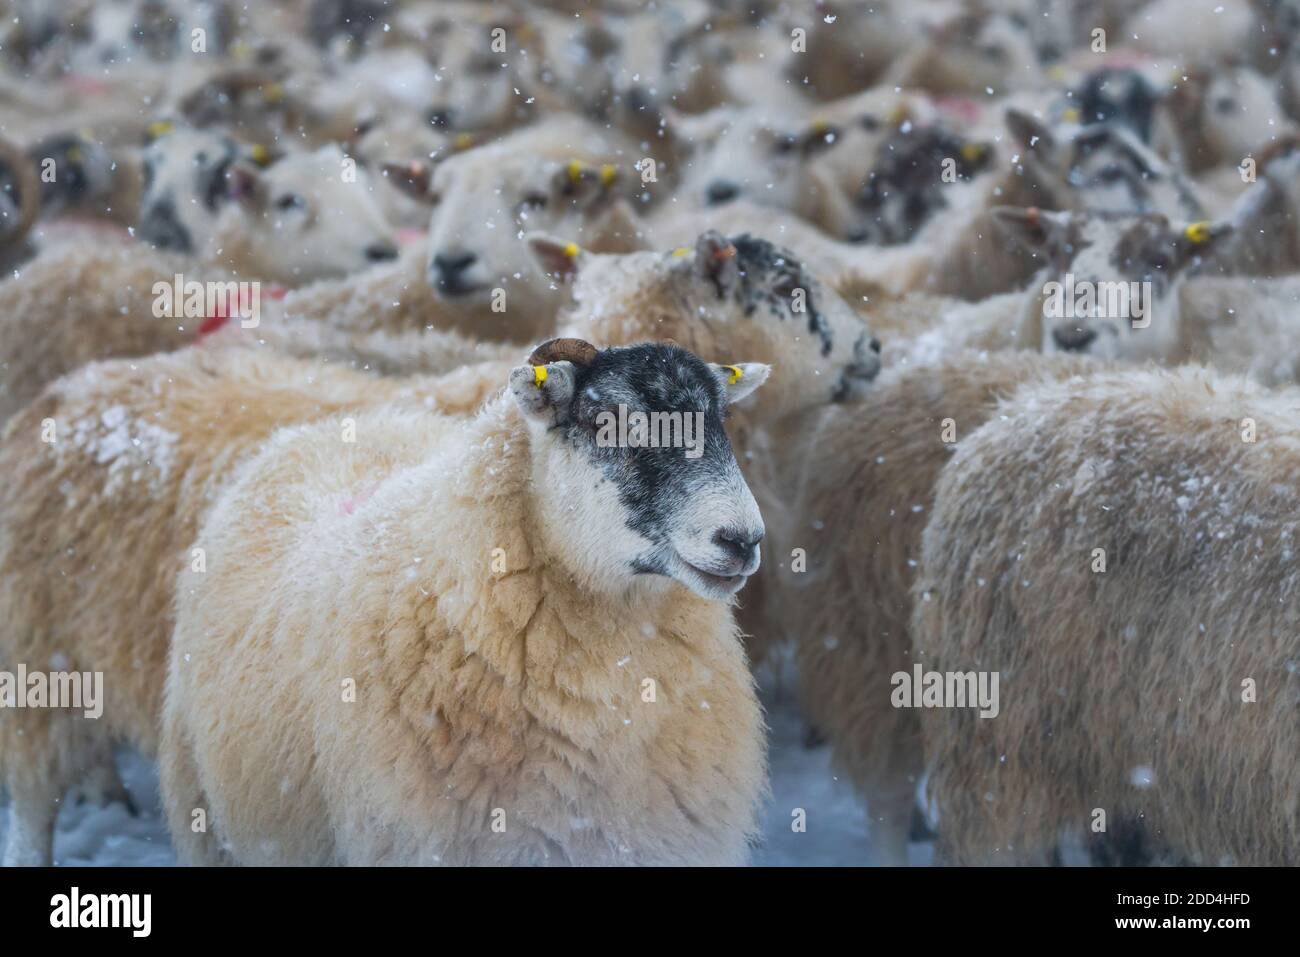 A flock of sheep in snow, Scotland - selective focus Stock Photo